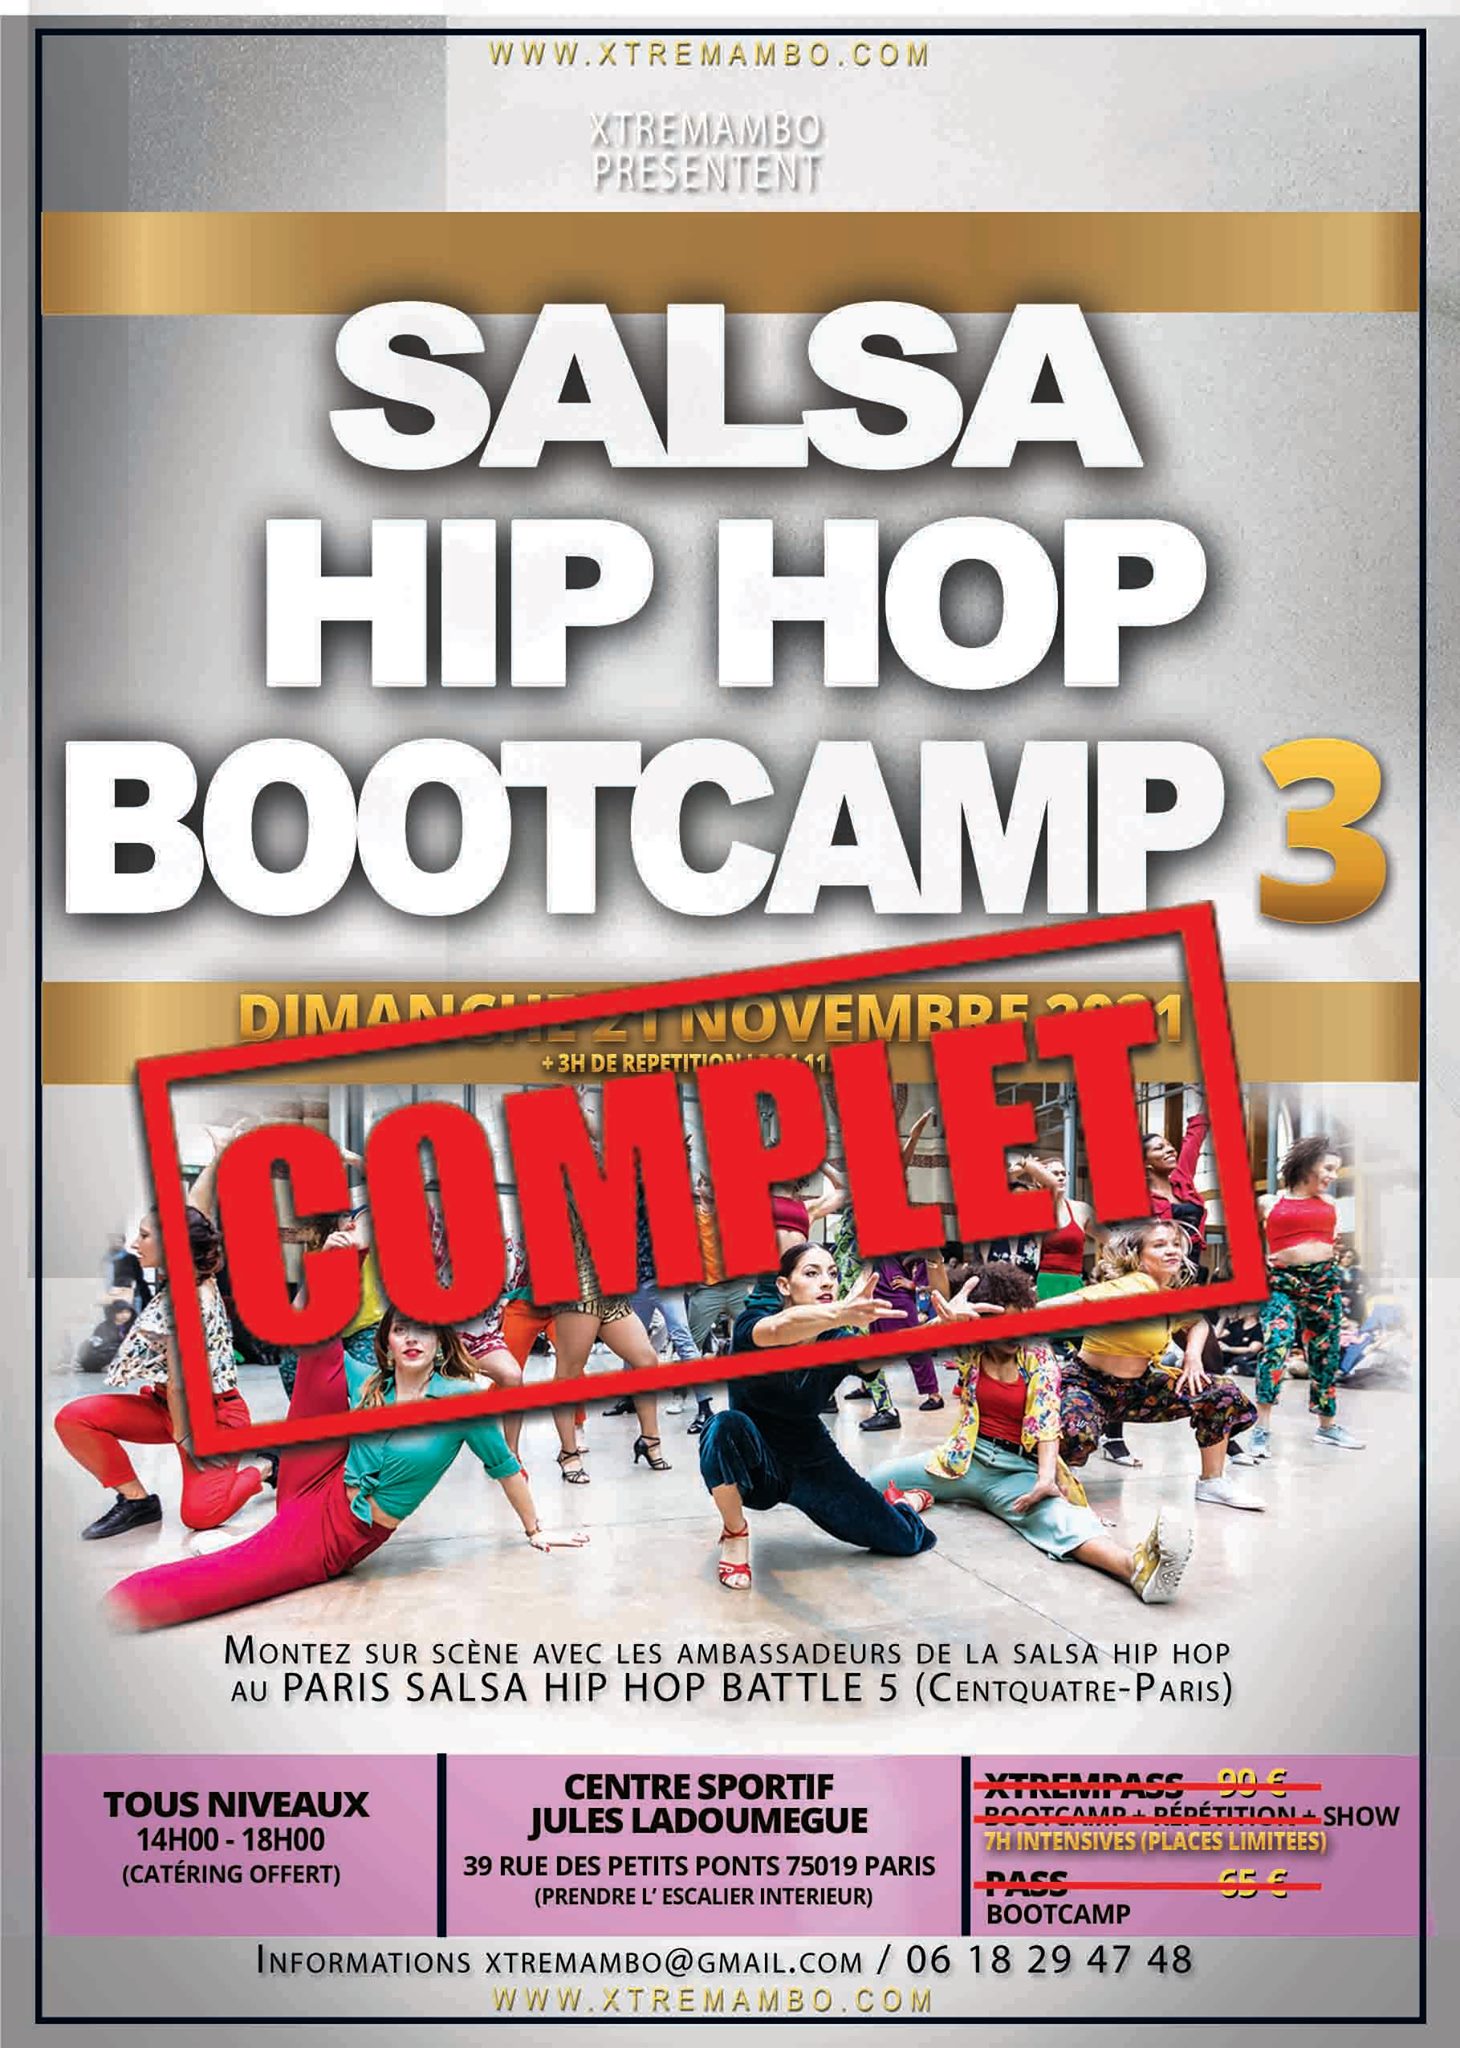 Salsa Hip Hop, Salsa Hip HOp Bootcamp 3, Xtremambo, Salsa Hip Hop Paris, rodrigue lino,